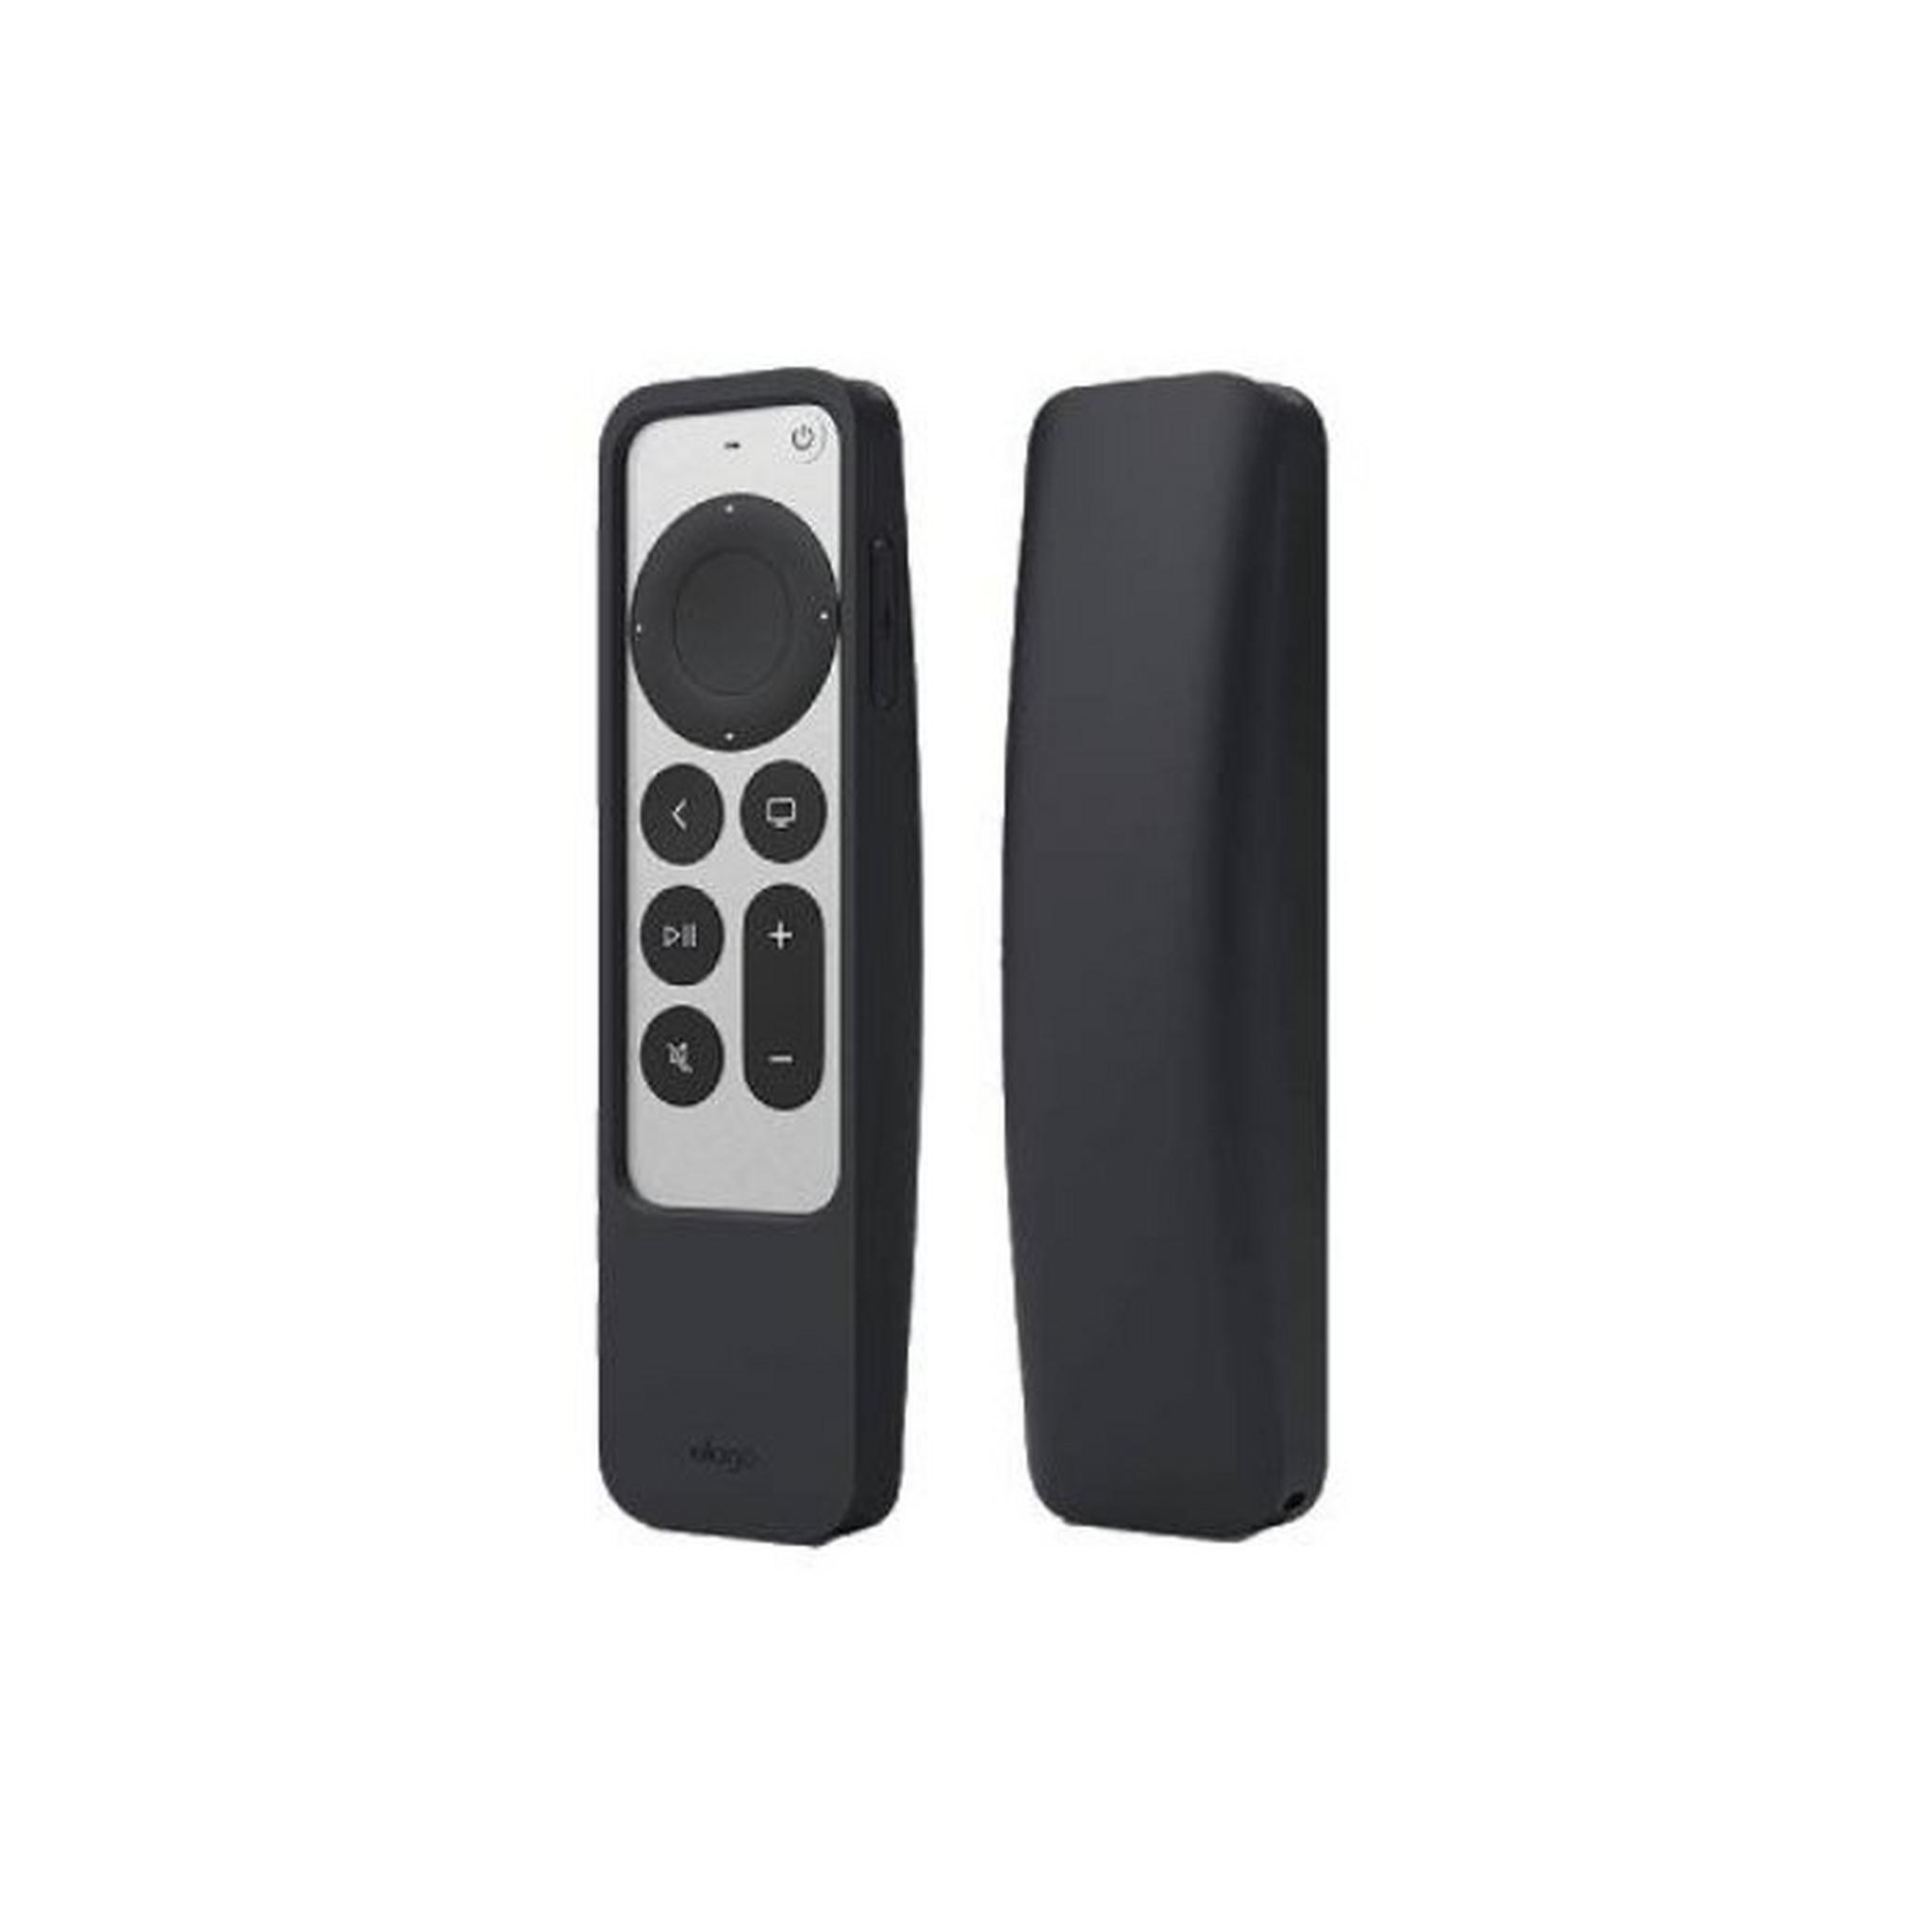 Elago Apple TV Remote R1 Intelli Case, ER1-21-BK - Black